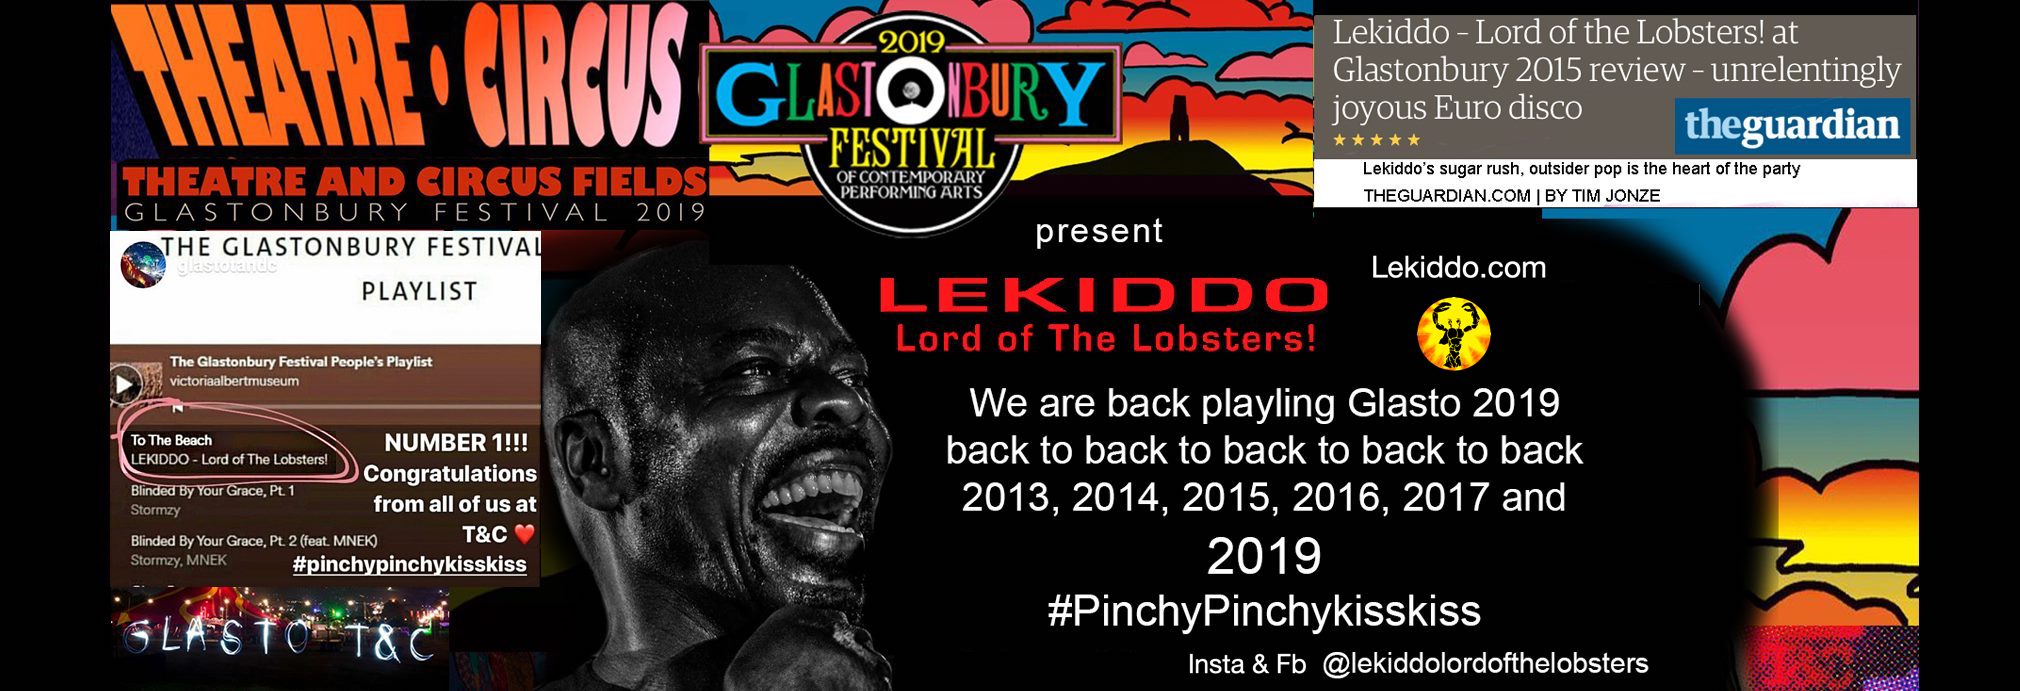 LEKIDDO - Lord of The Lobsters! #PinchyPinchykisskiss